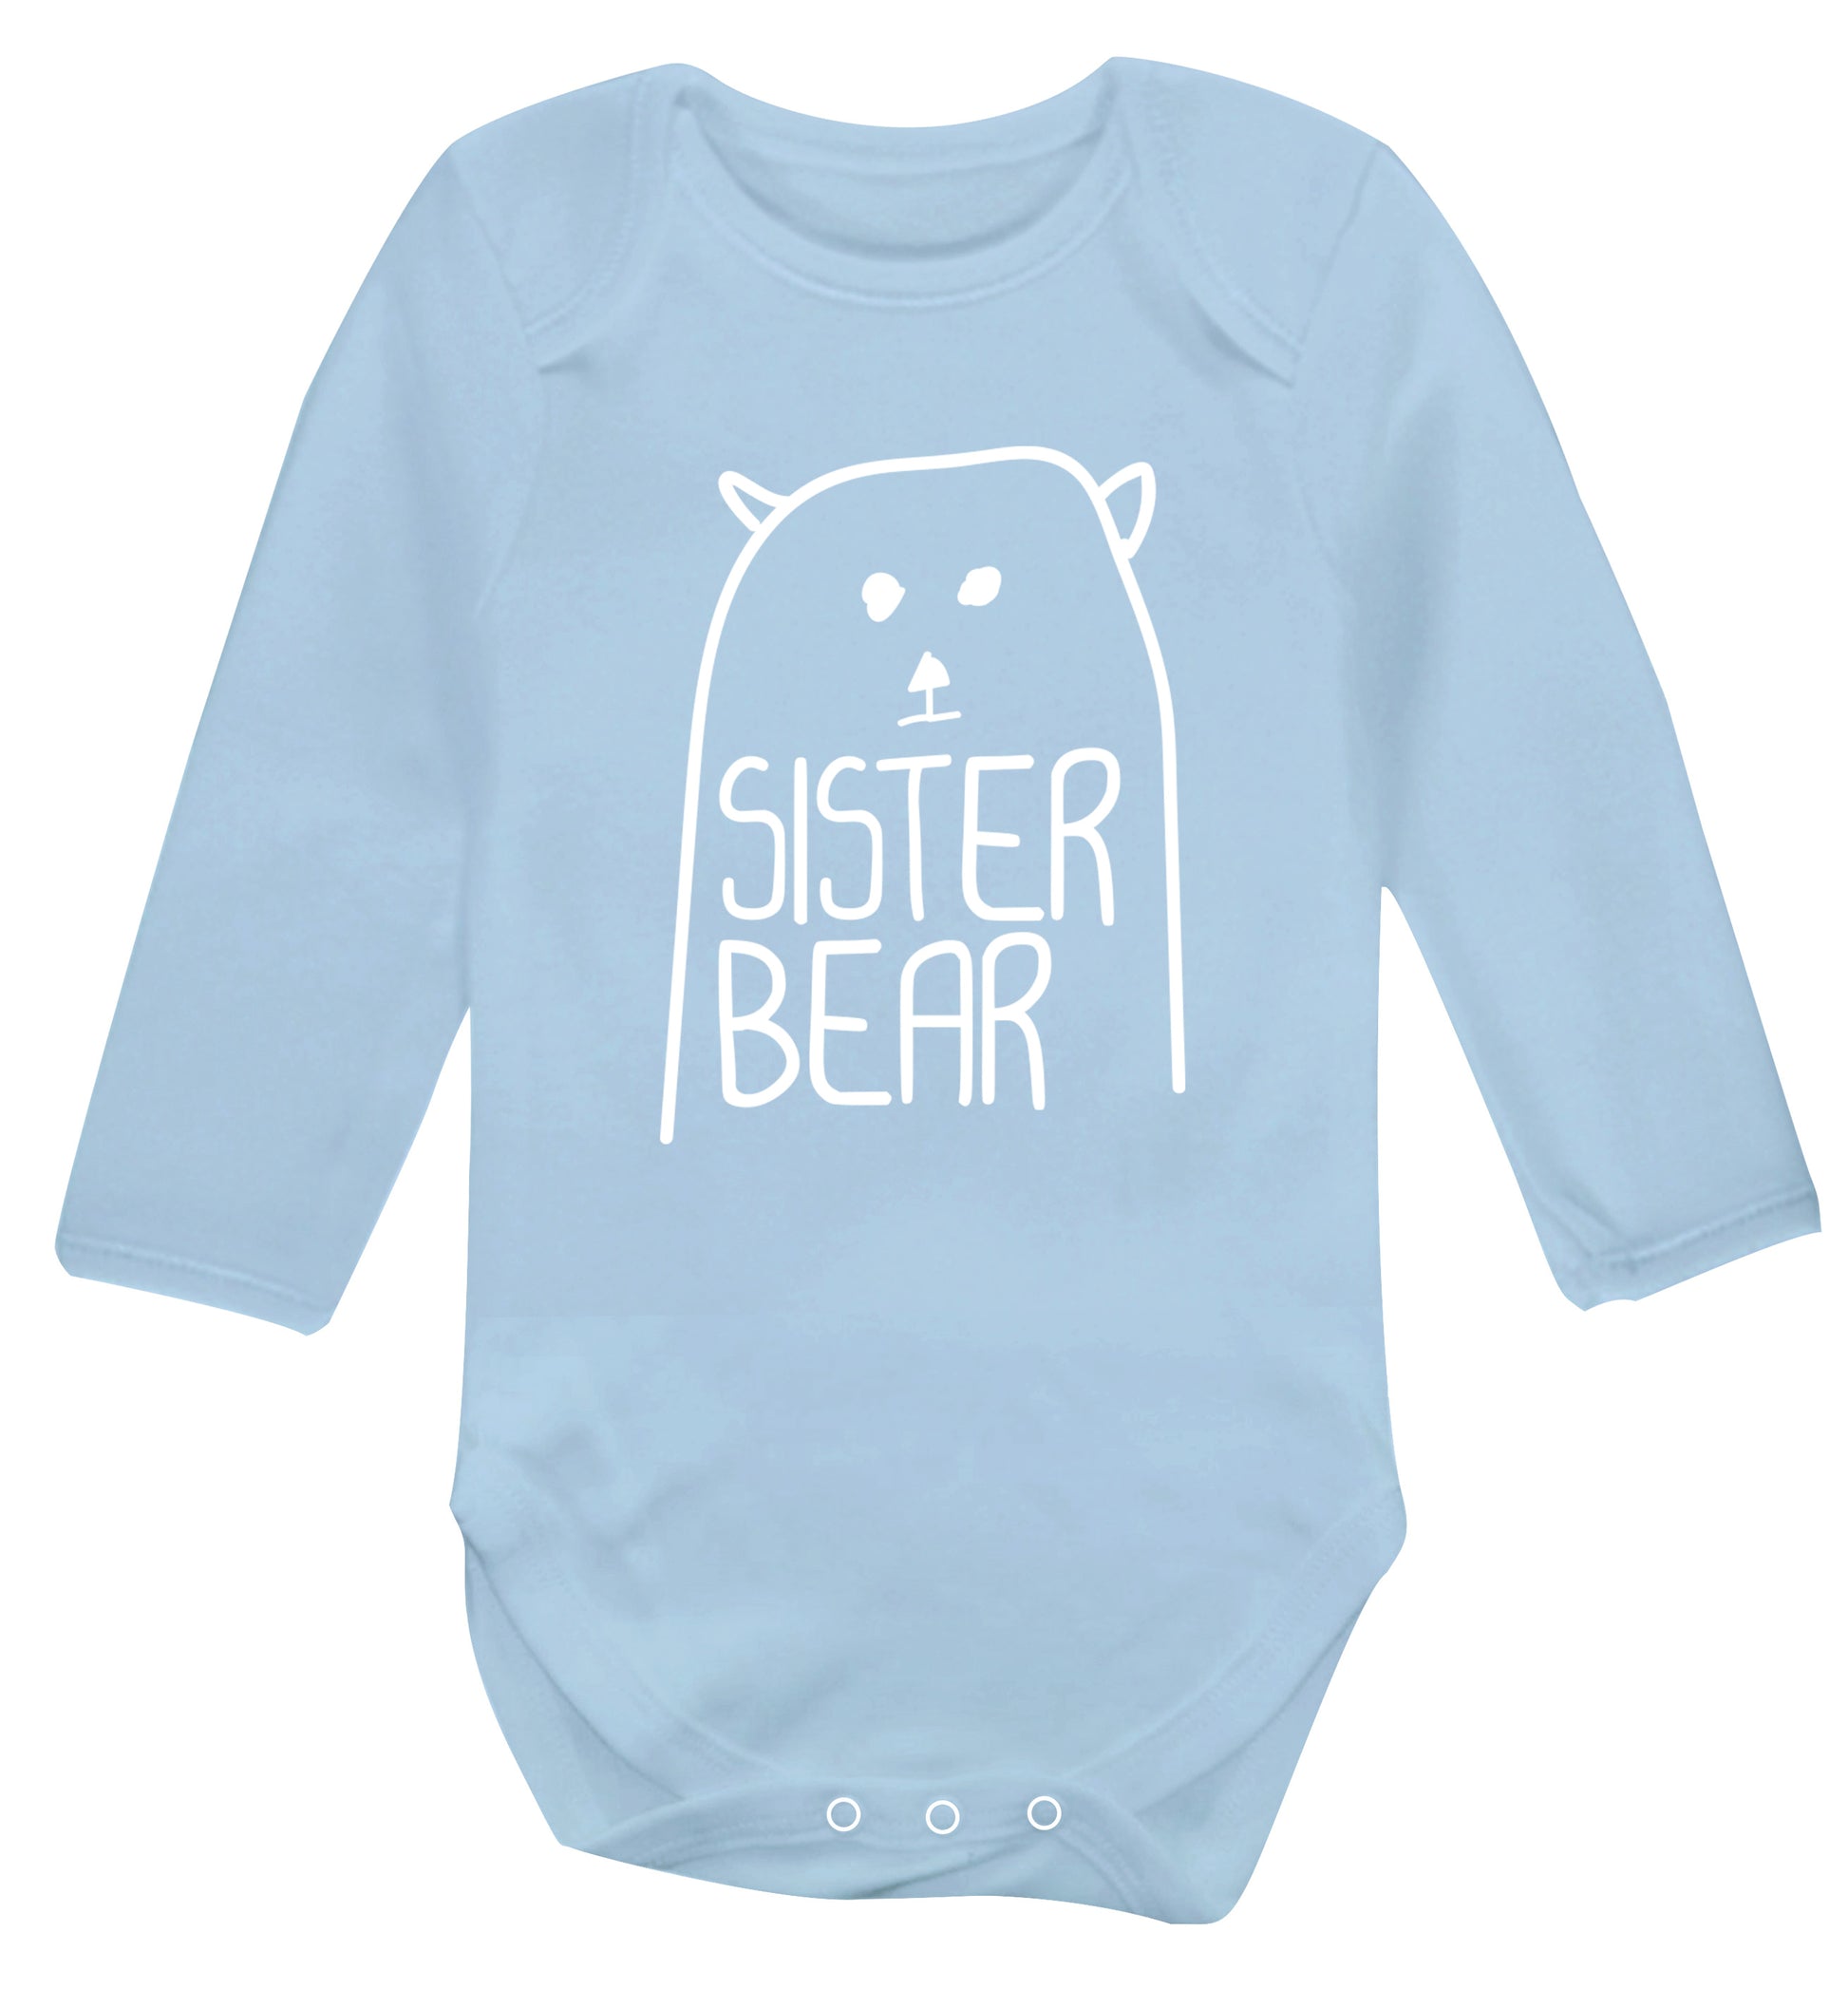 Sister bear Baby Vest long sleeved pale blue 6-12 months